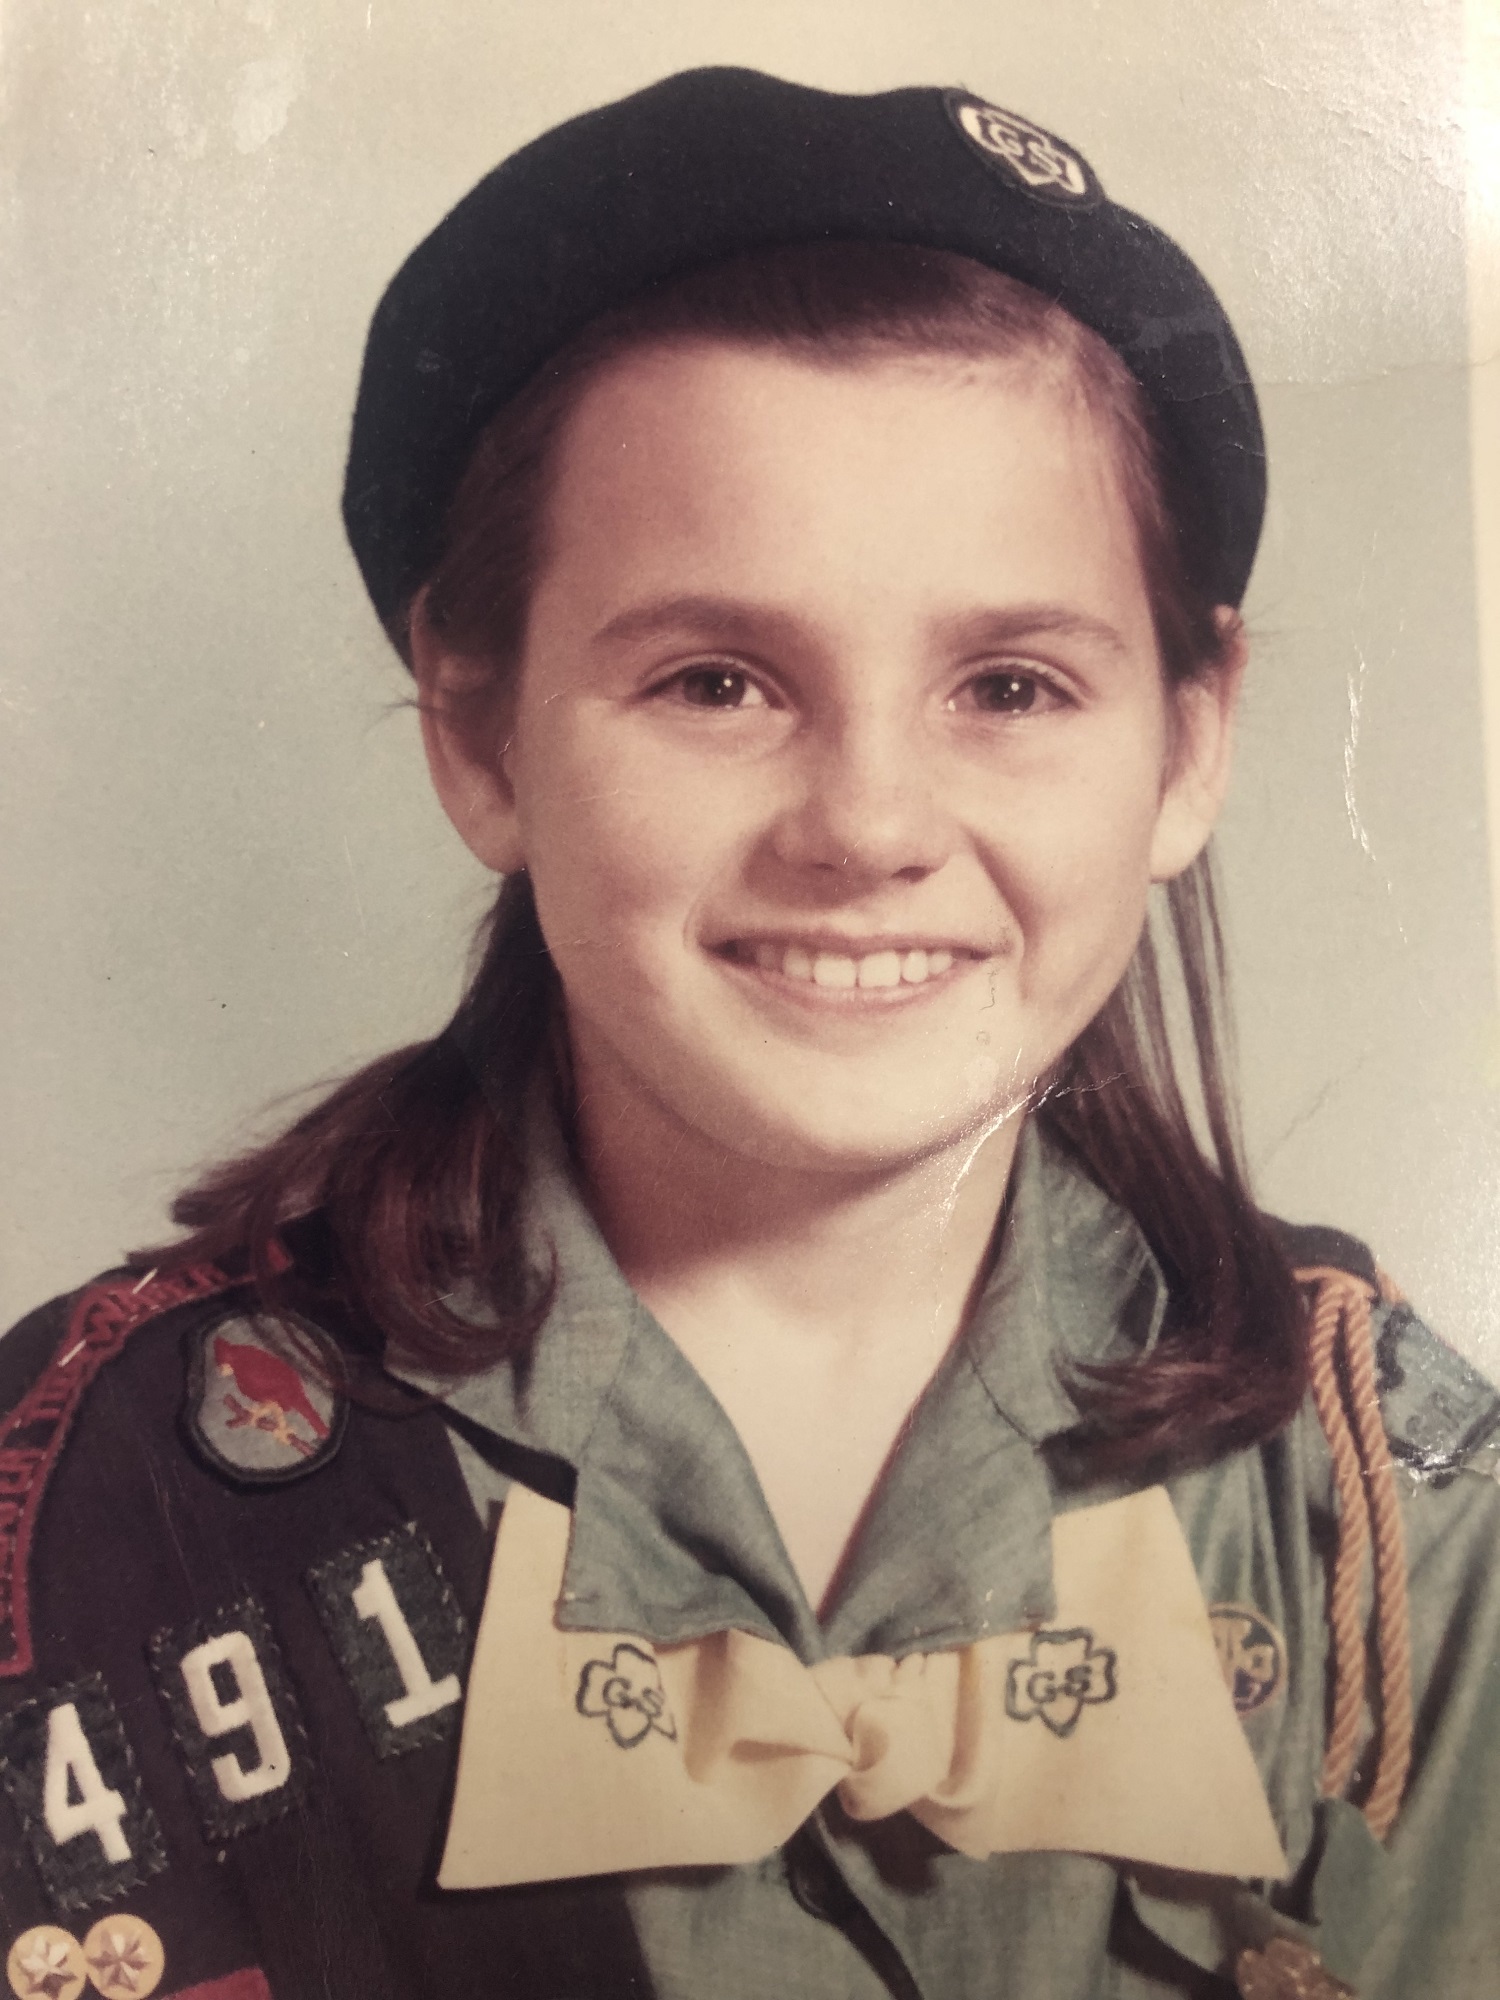 Judy joined Junior Troop 491 in 1964